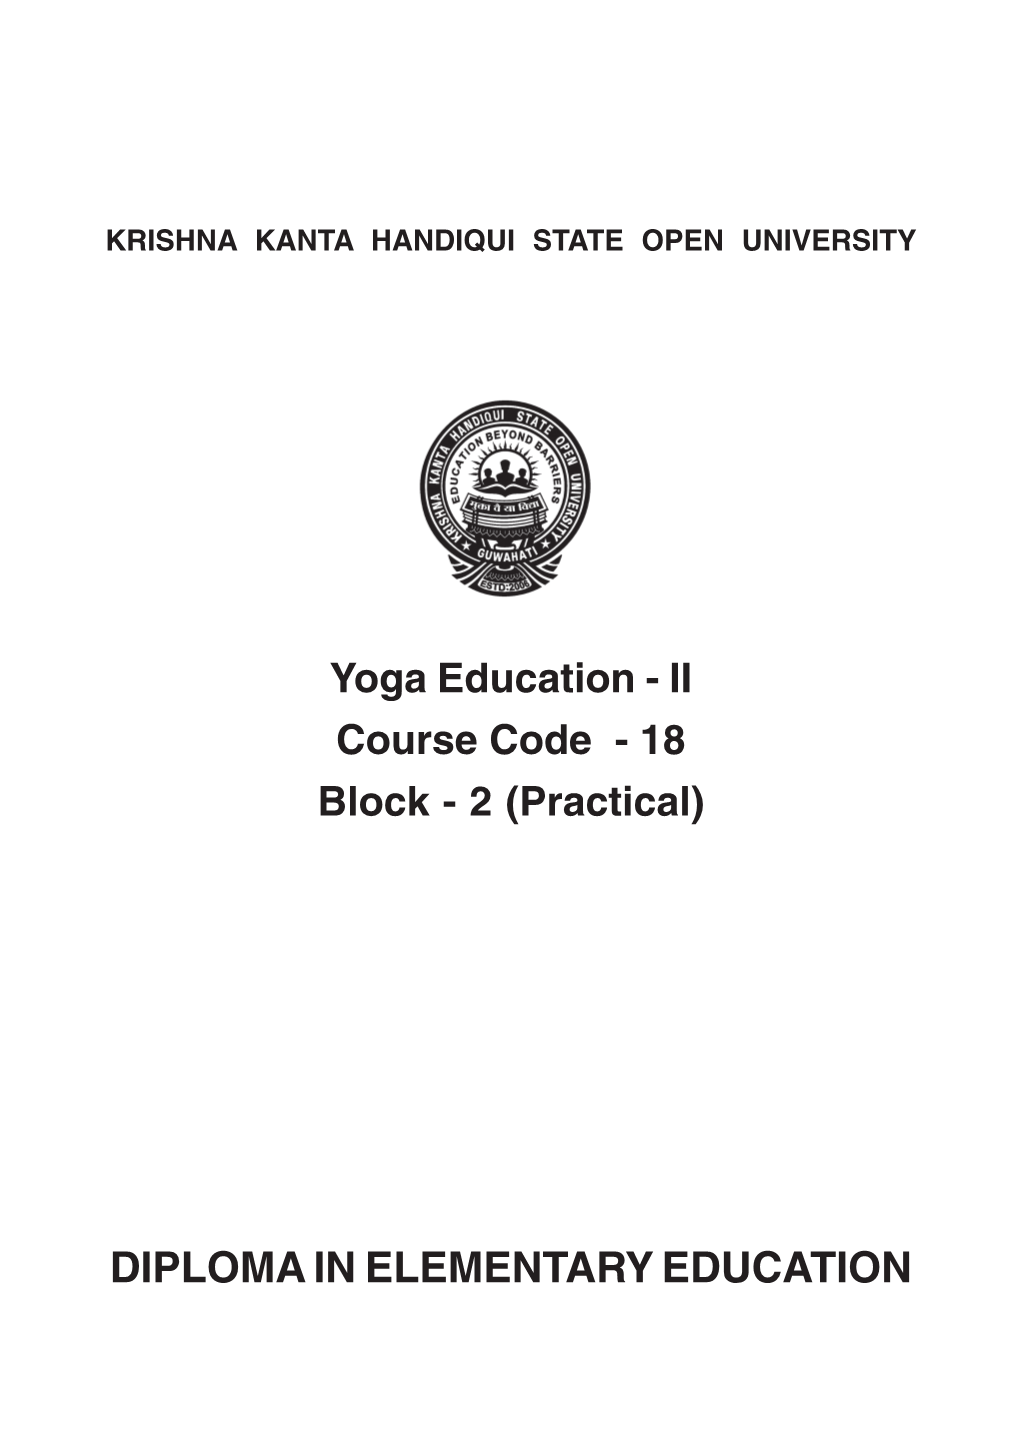 Yoga Education - II Course Code - 18 Block - 2 (Practical)